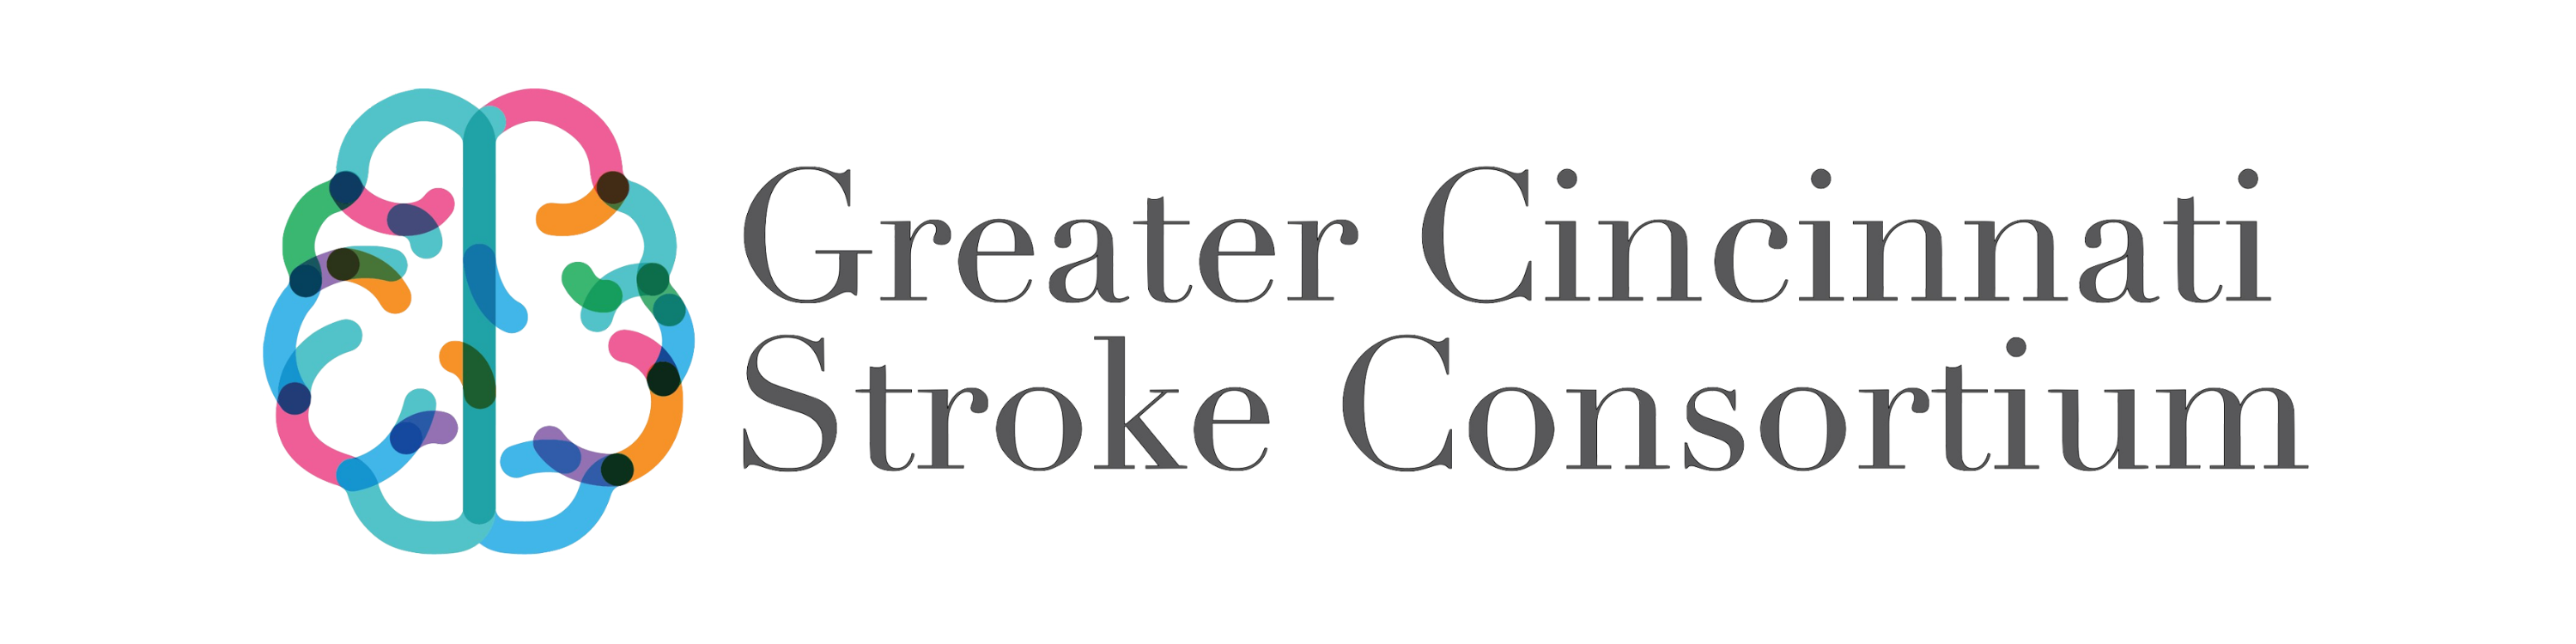 Greater Cincinnati Stroke Consortium